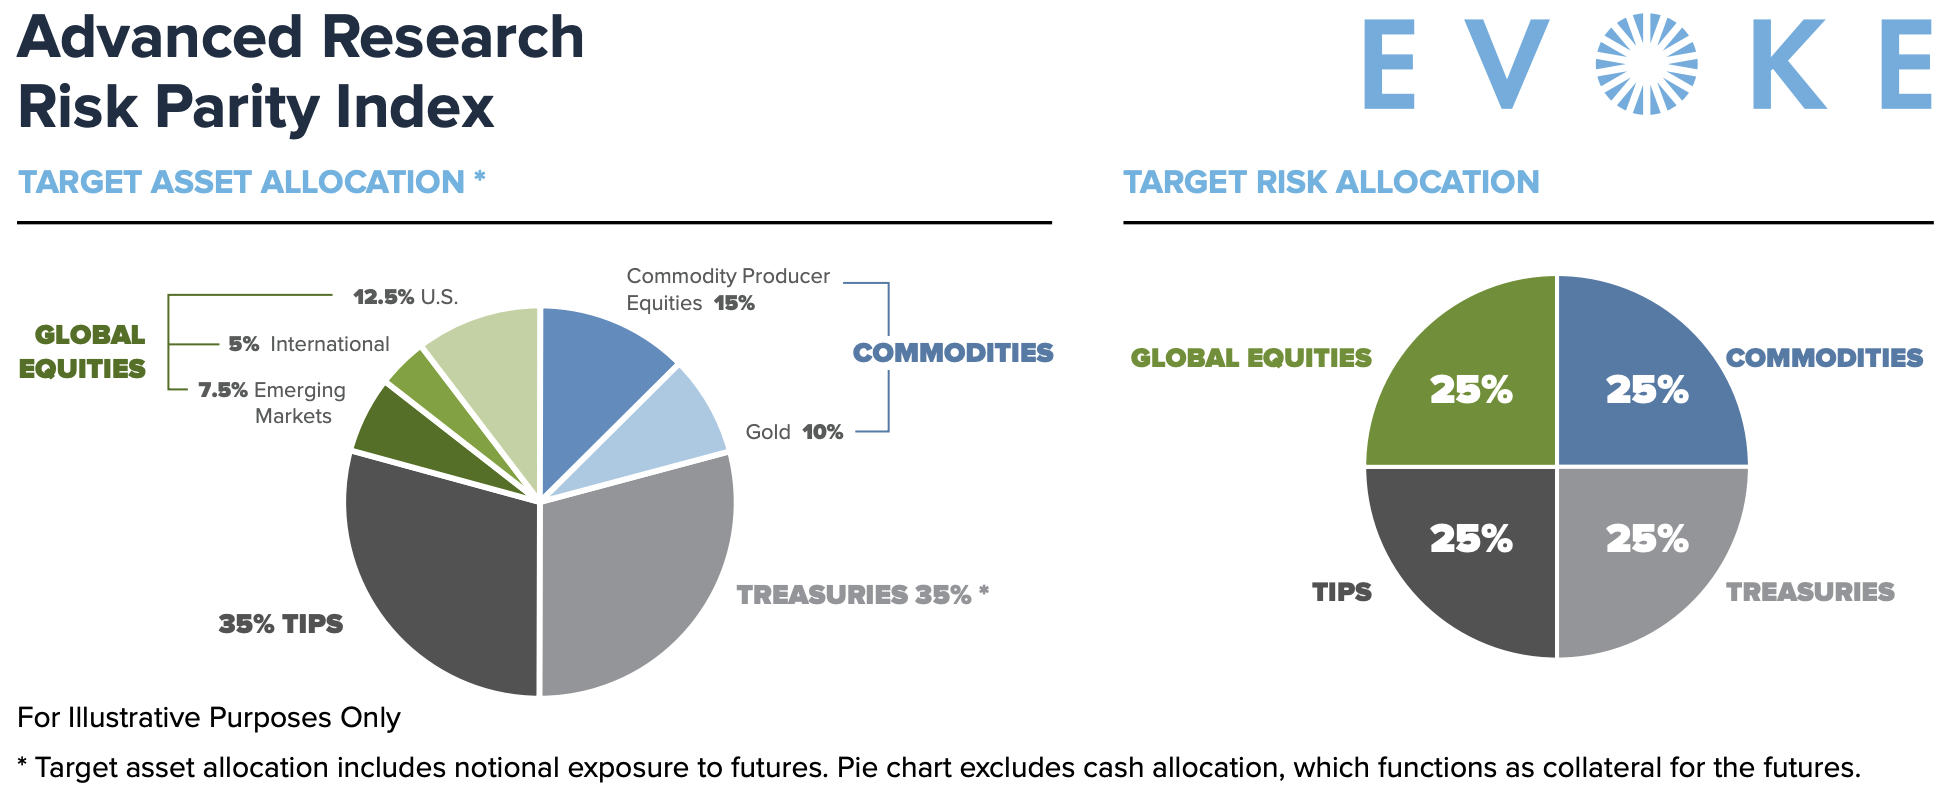 RPAR Risk Parity ETF Target Asset Allocation and Target Risk Allocation